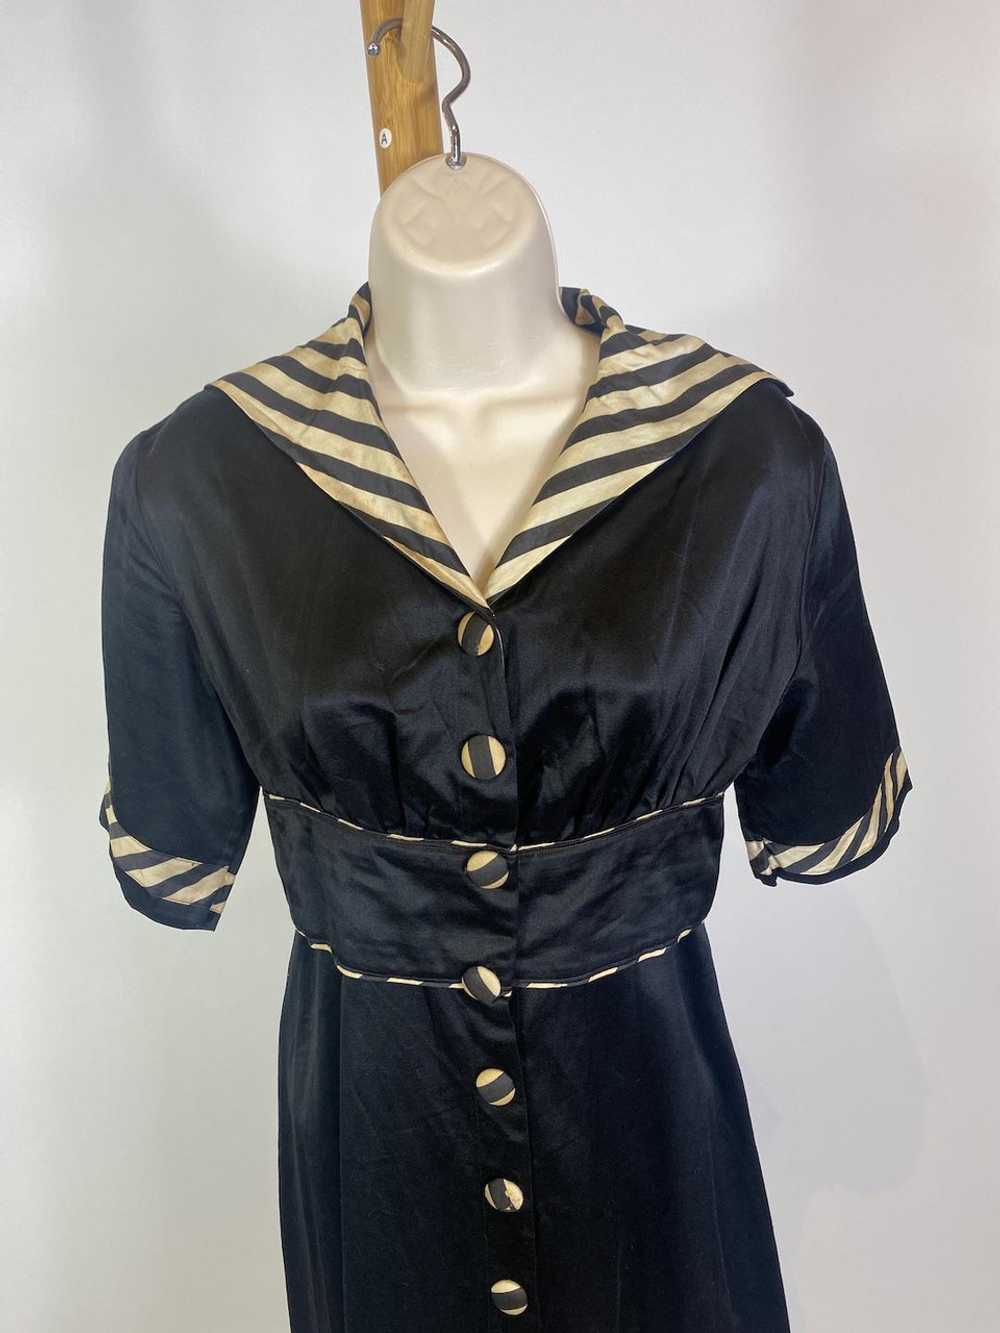 1940s Black Cotton Striped Trim Day Dress - image 2